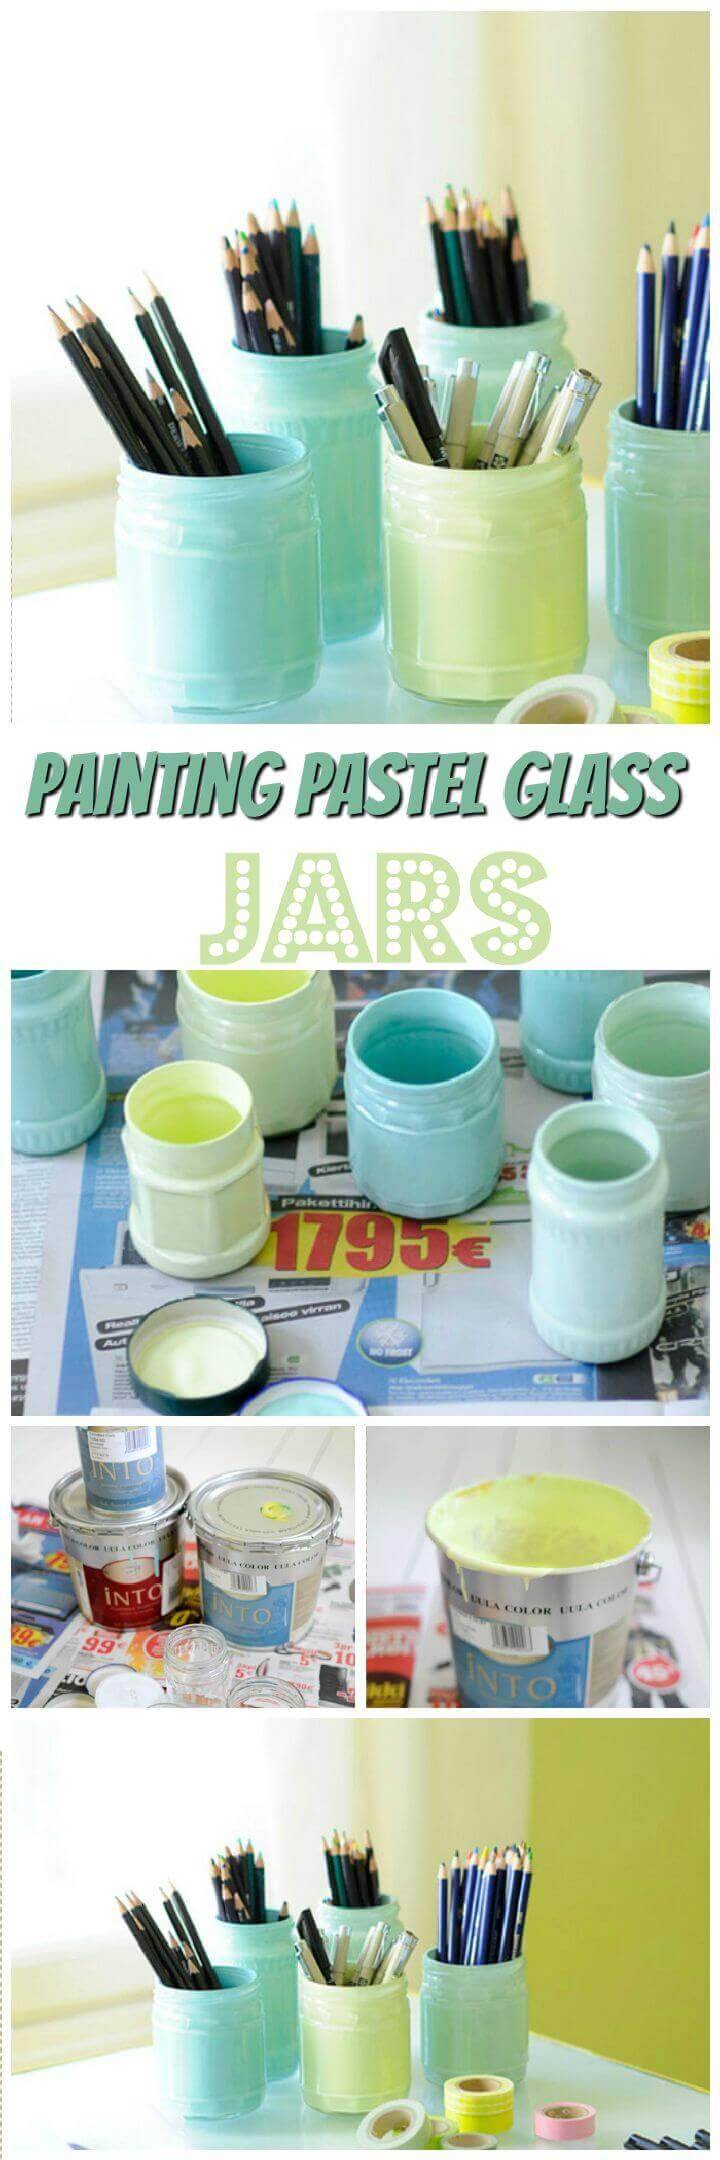 Painting pastel glass jars